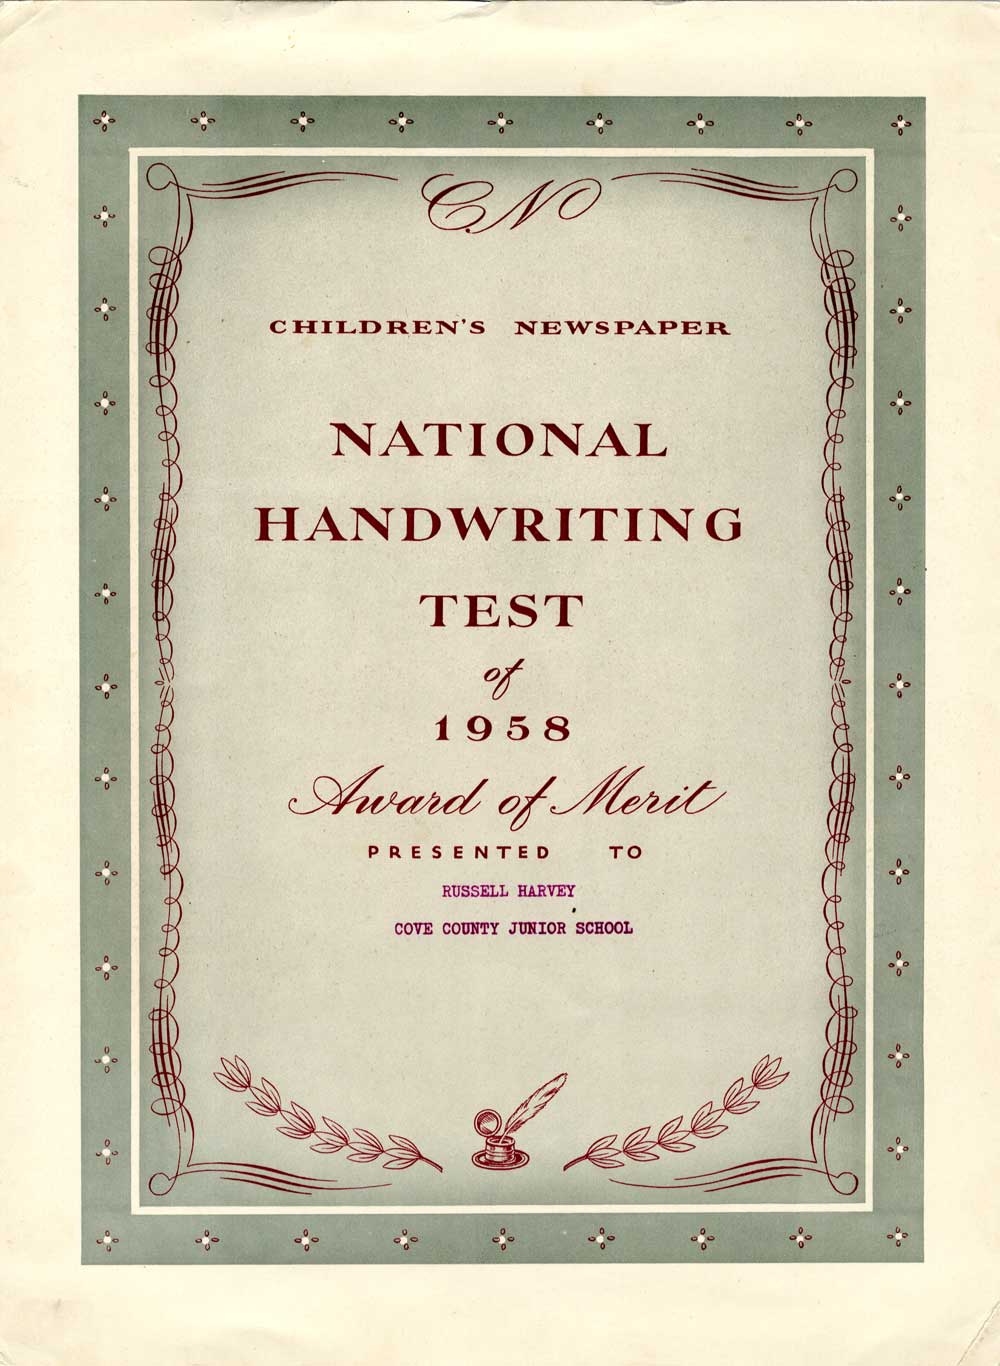 National Handwriting Test Certificate